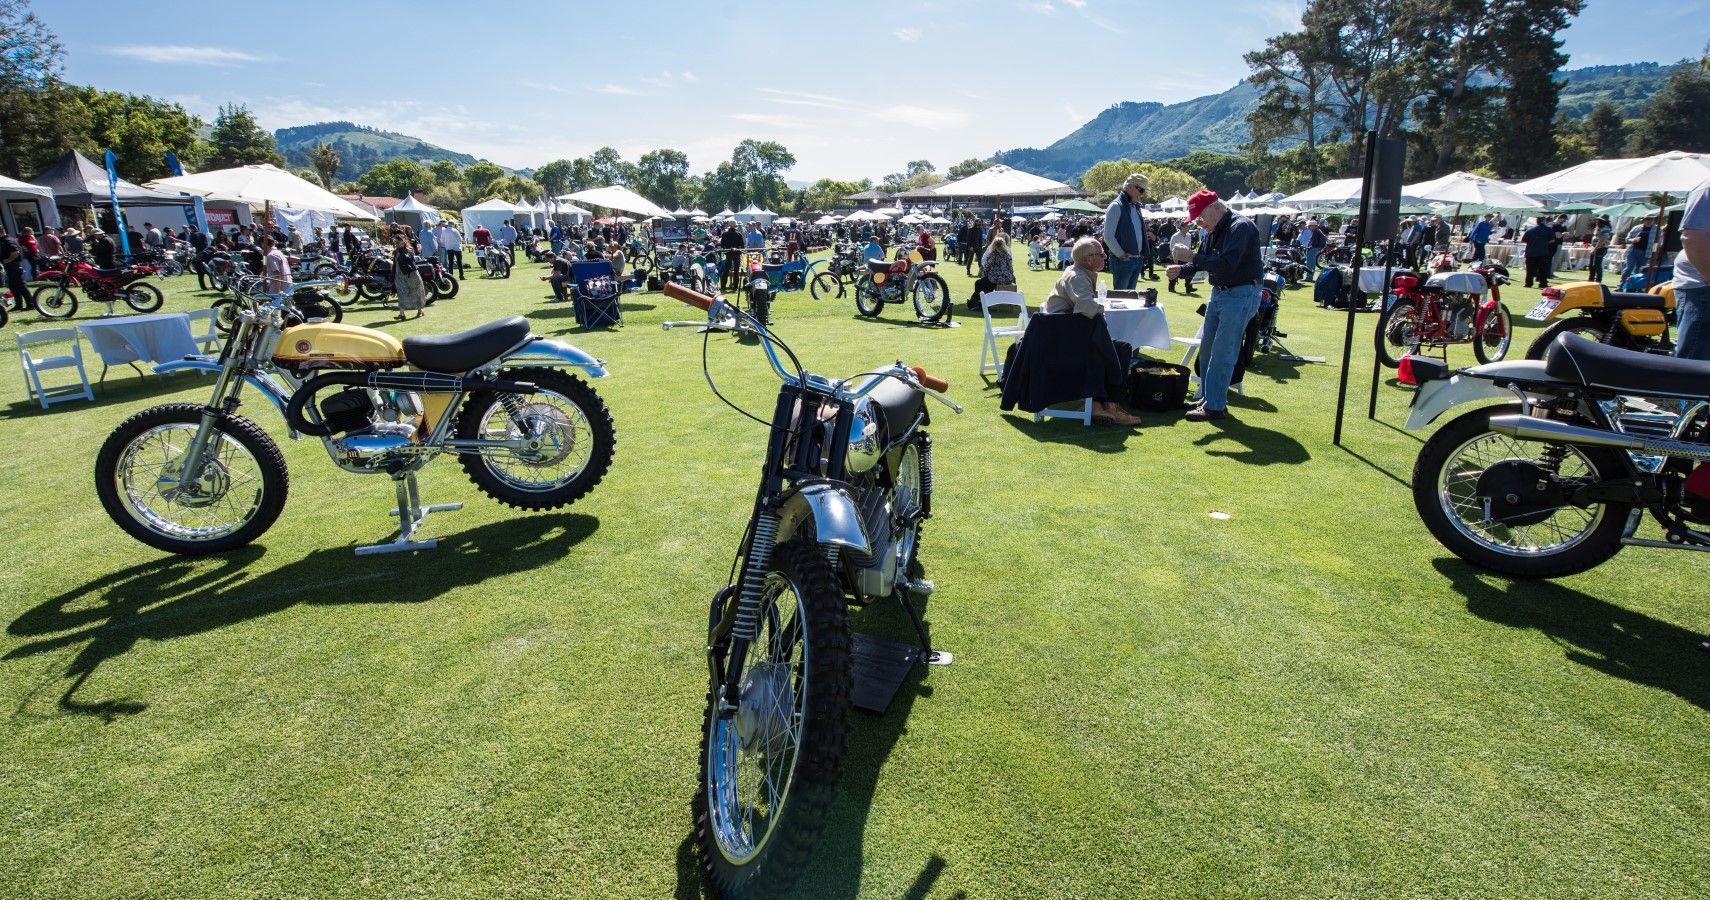 2022 Quail Motorcycle Gathering showcase view